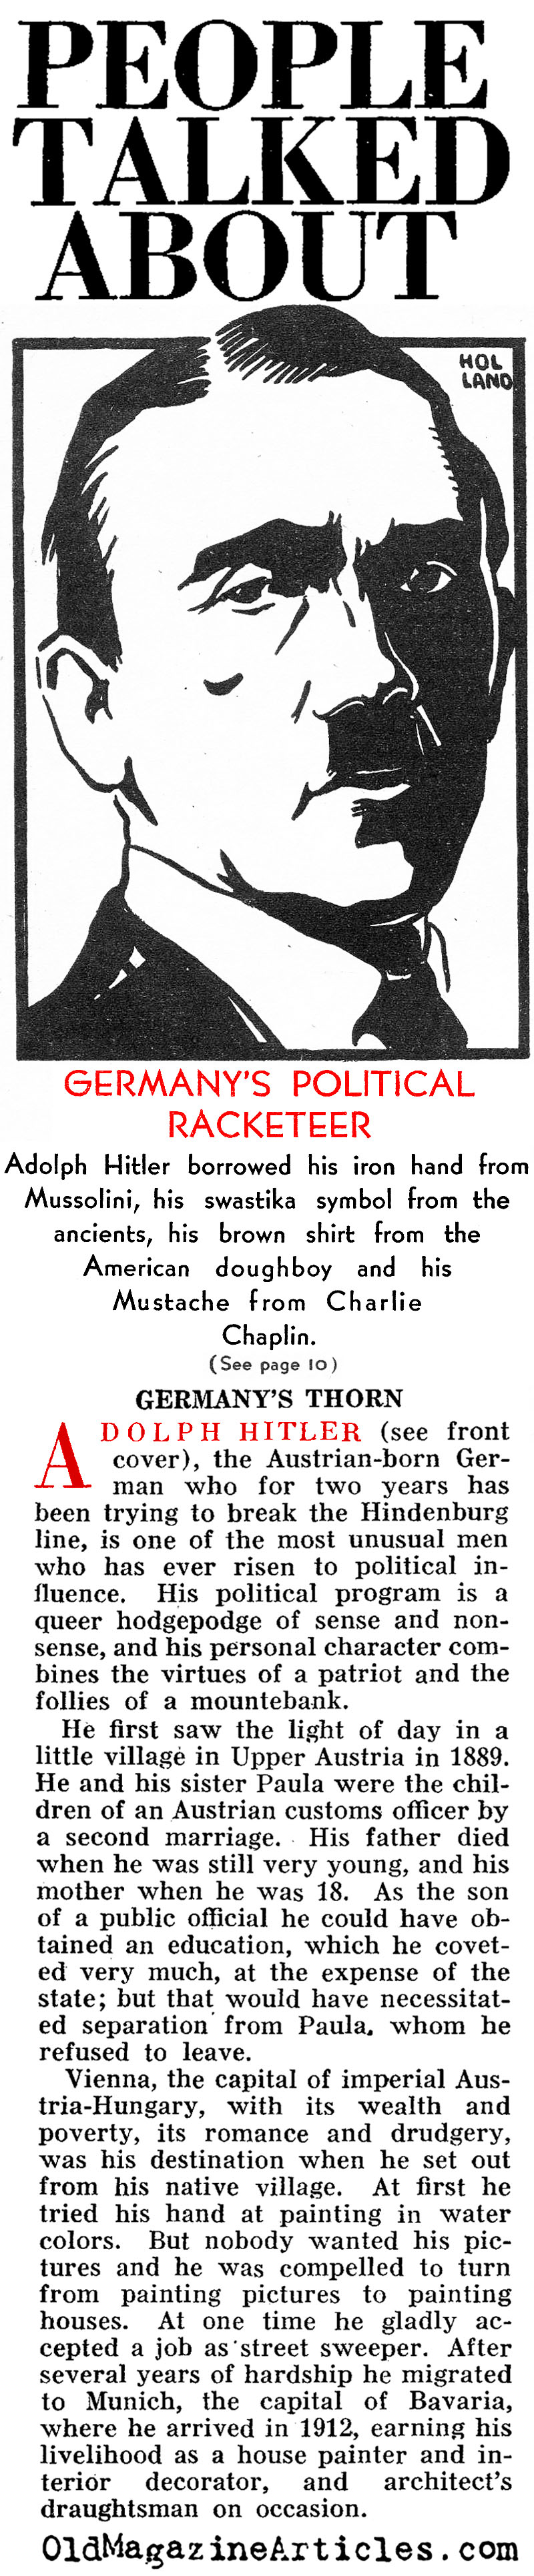 Hitler On The Brink Of Power (Pathfinder Magazine, 1932)